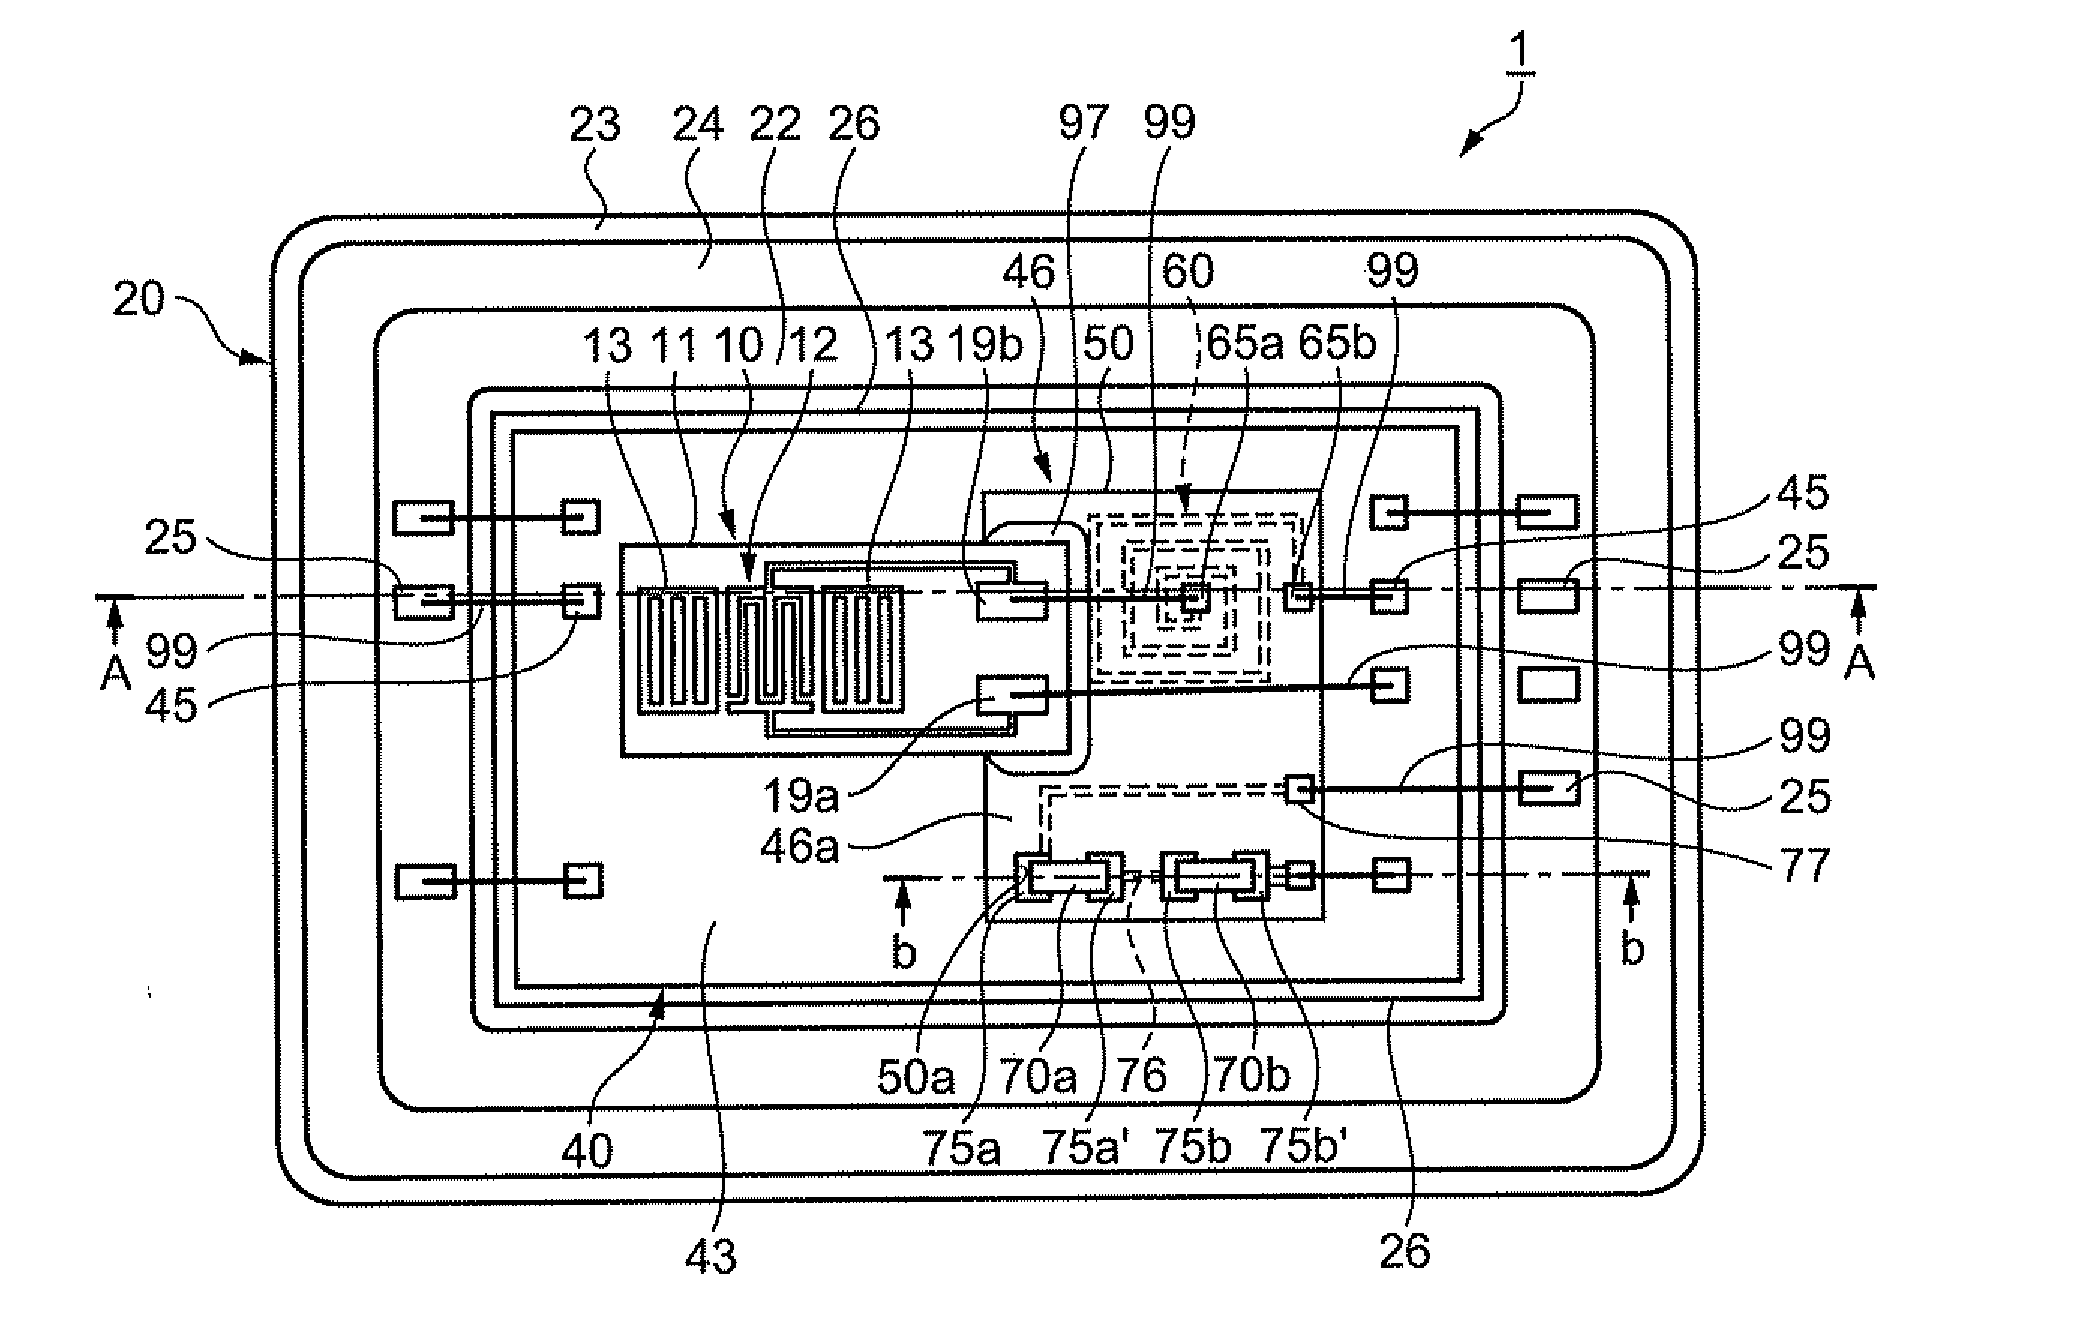 Piezoelectric oscillator and transmitter